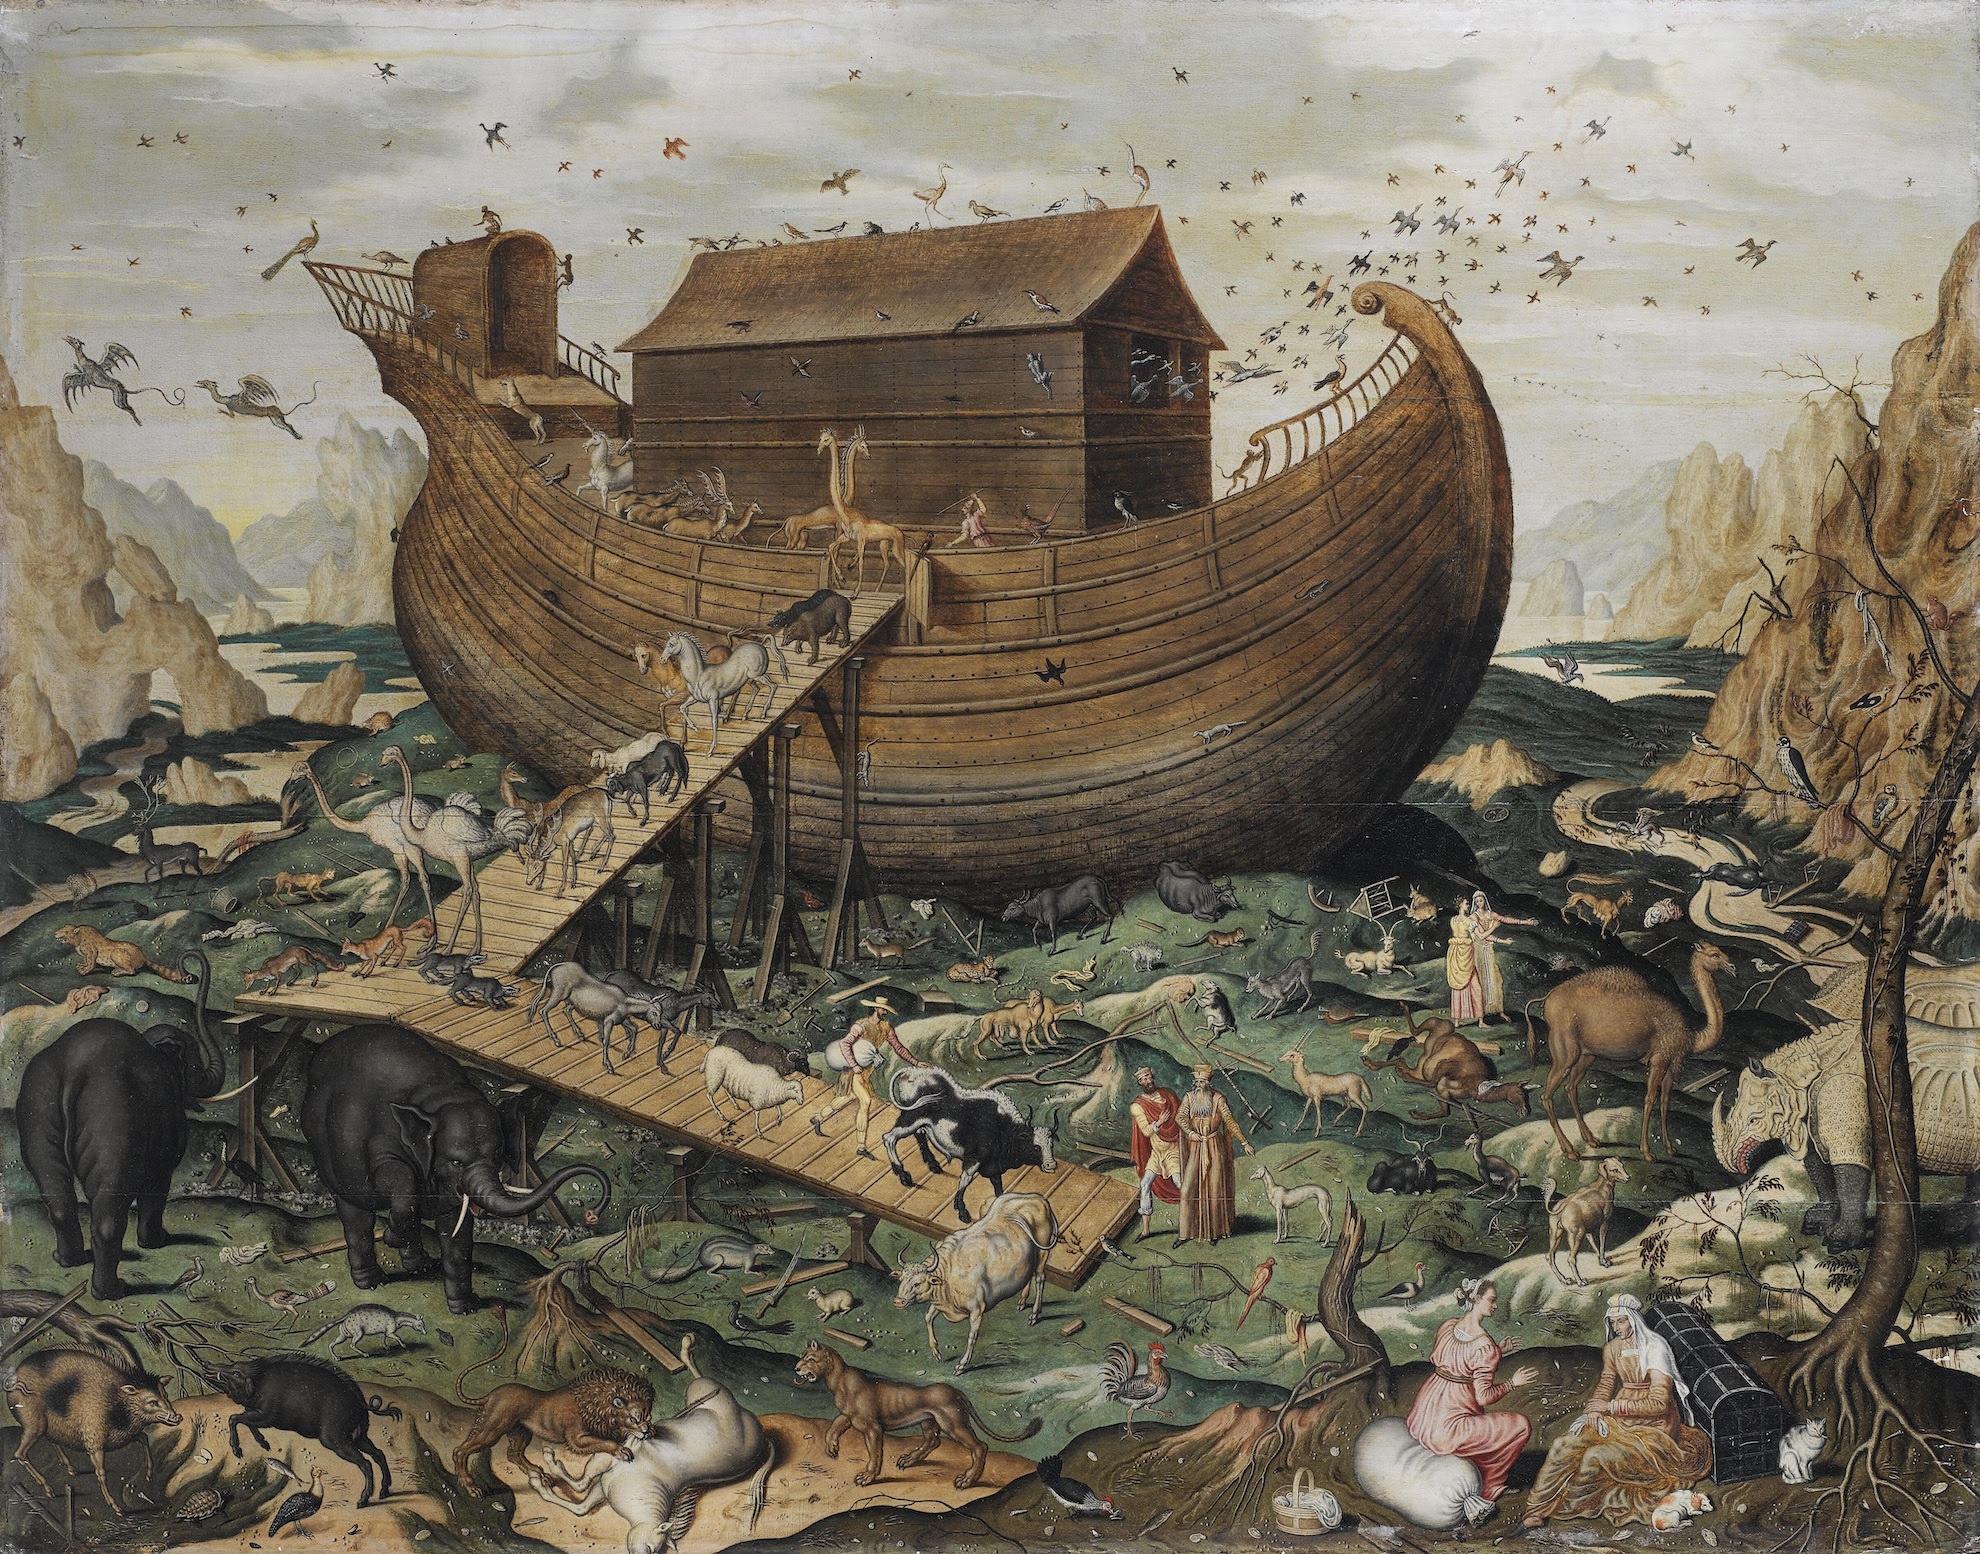 Noah's Ark hero image